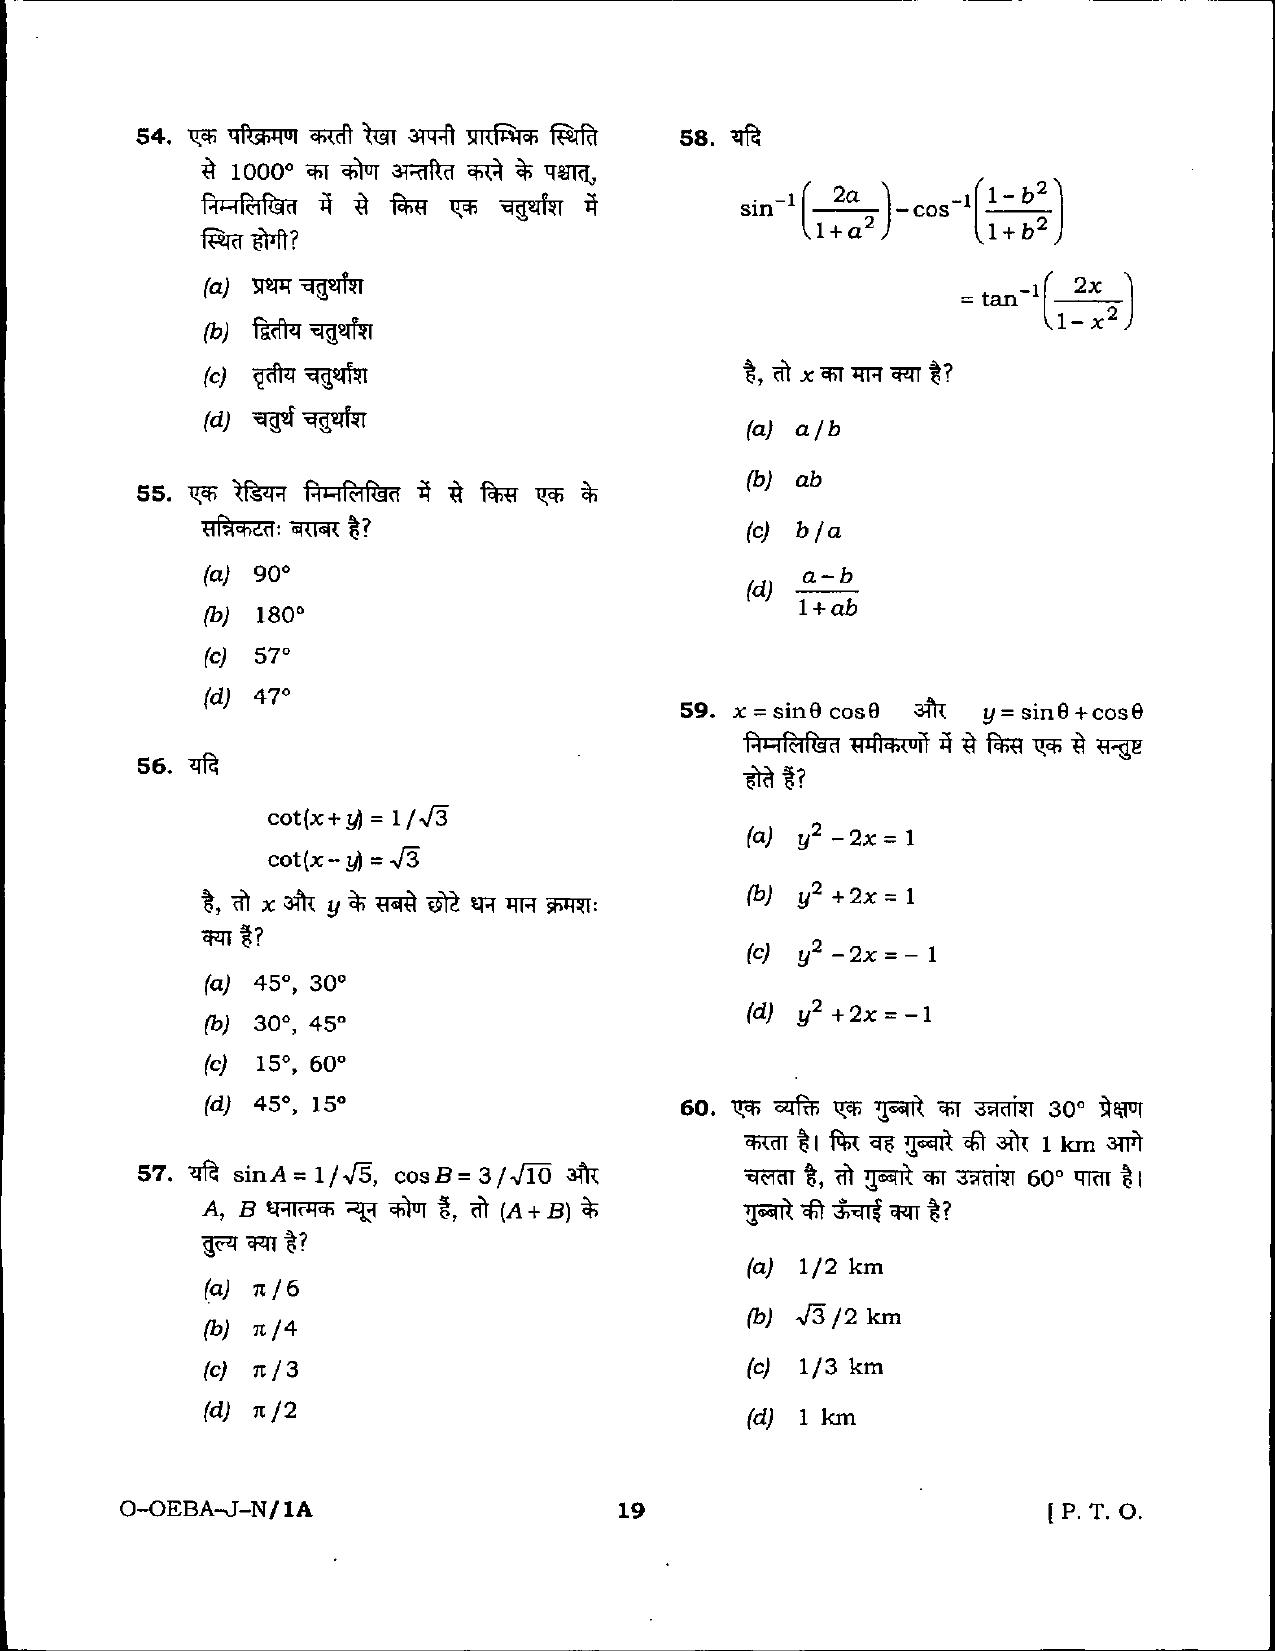 Odisha Junior Clerk Question Paper - General Mathematics - Page 19